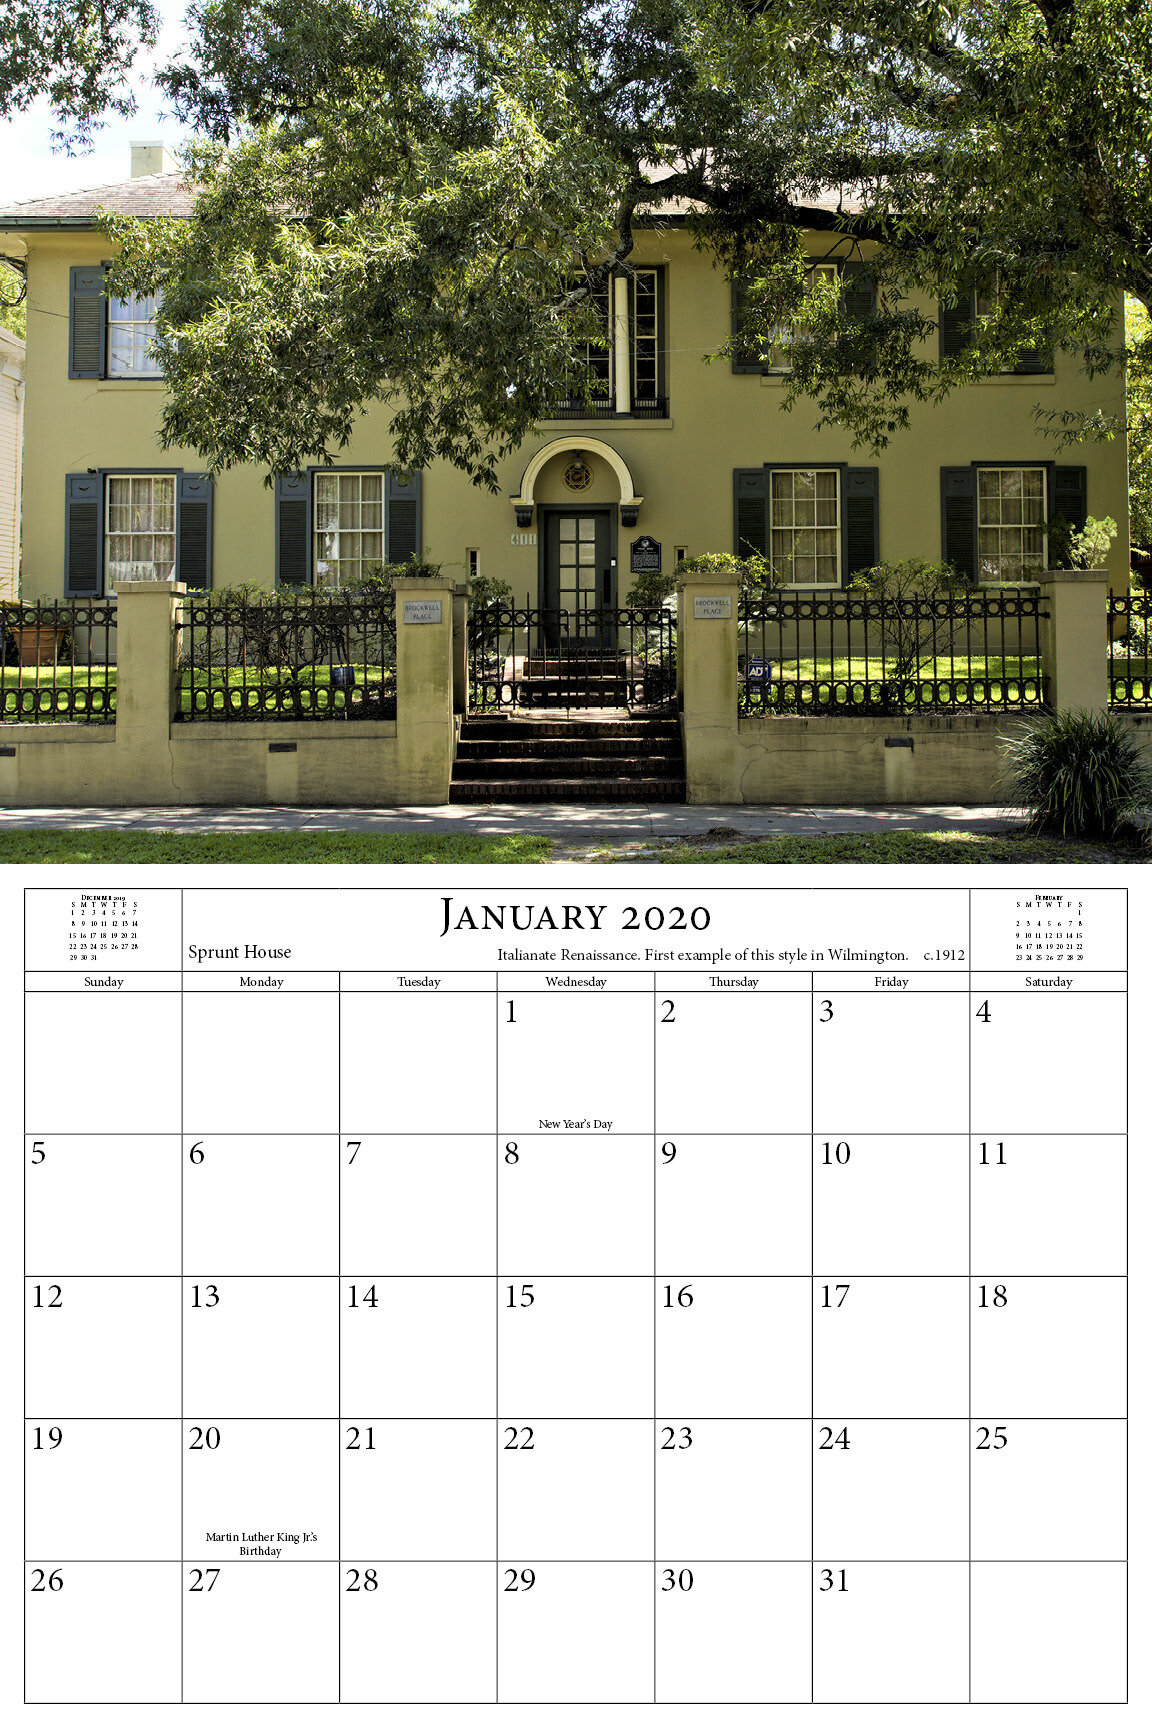 Wilmington Calendar 2019 Desgin by Cybergraph Photos by Michael Smith14.jpg